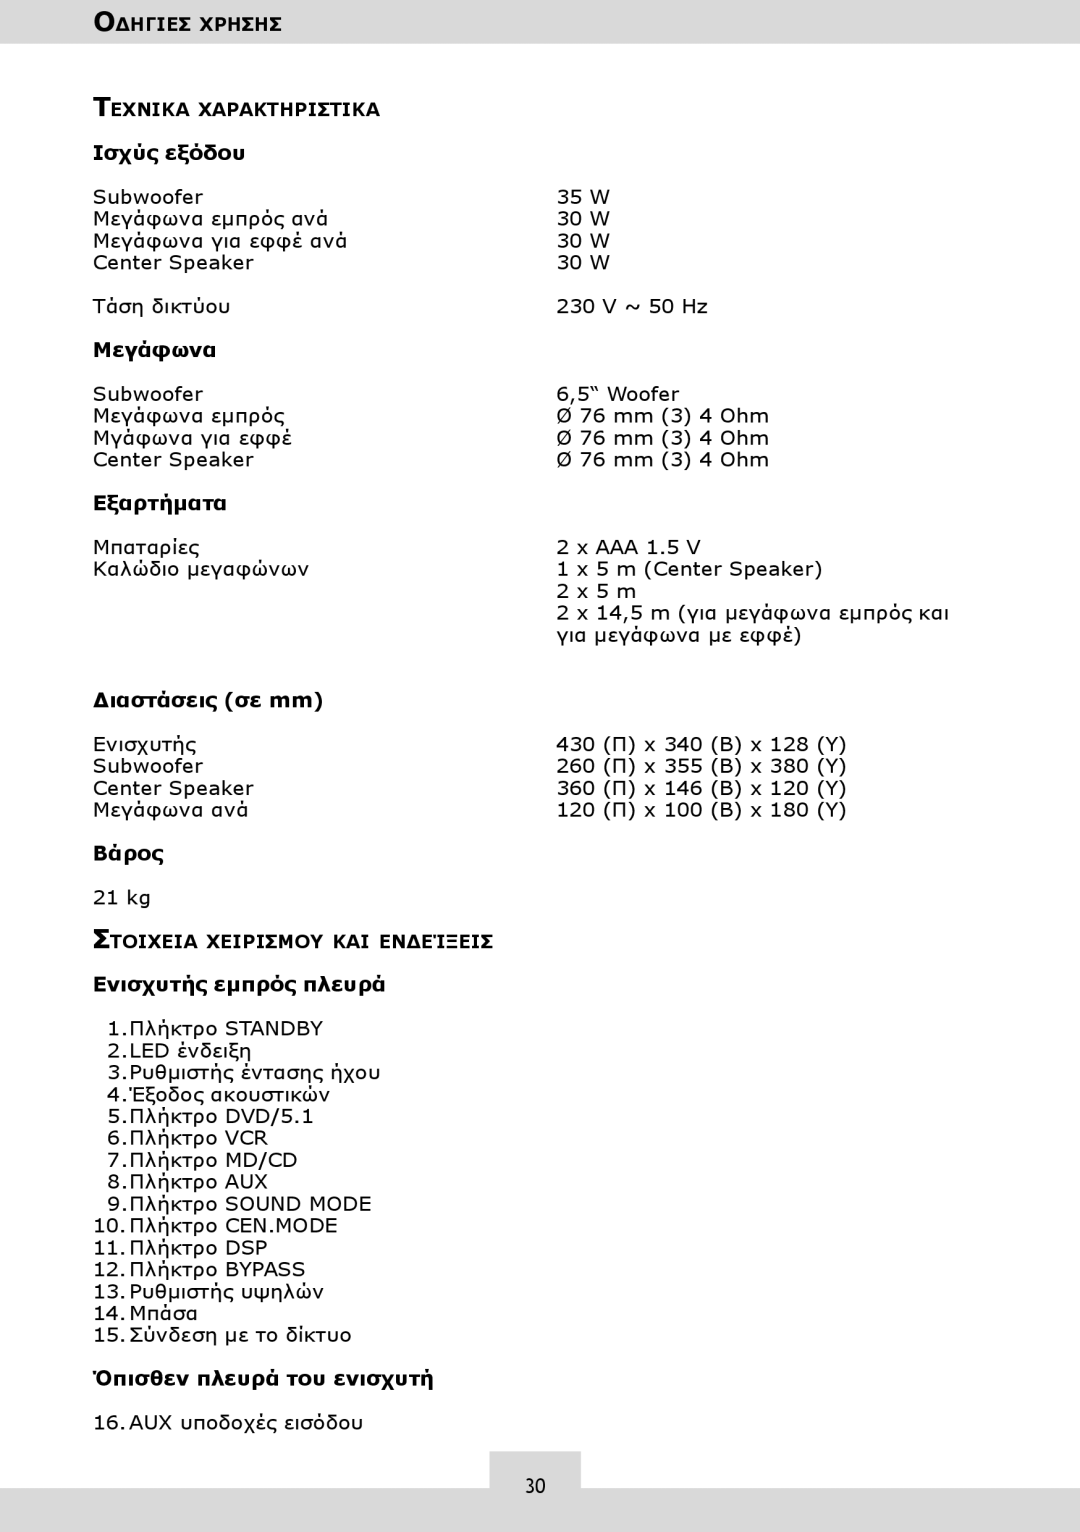 Dolby Laboratories KH 02 manual Μεγάφωνα, Εξαρτήματα, Διαστάσεις σε mm, Βάρος, Ενισχυτής εμπρός πλευρά 